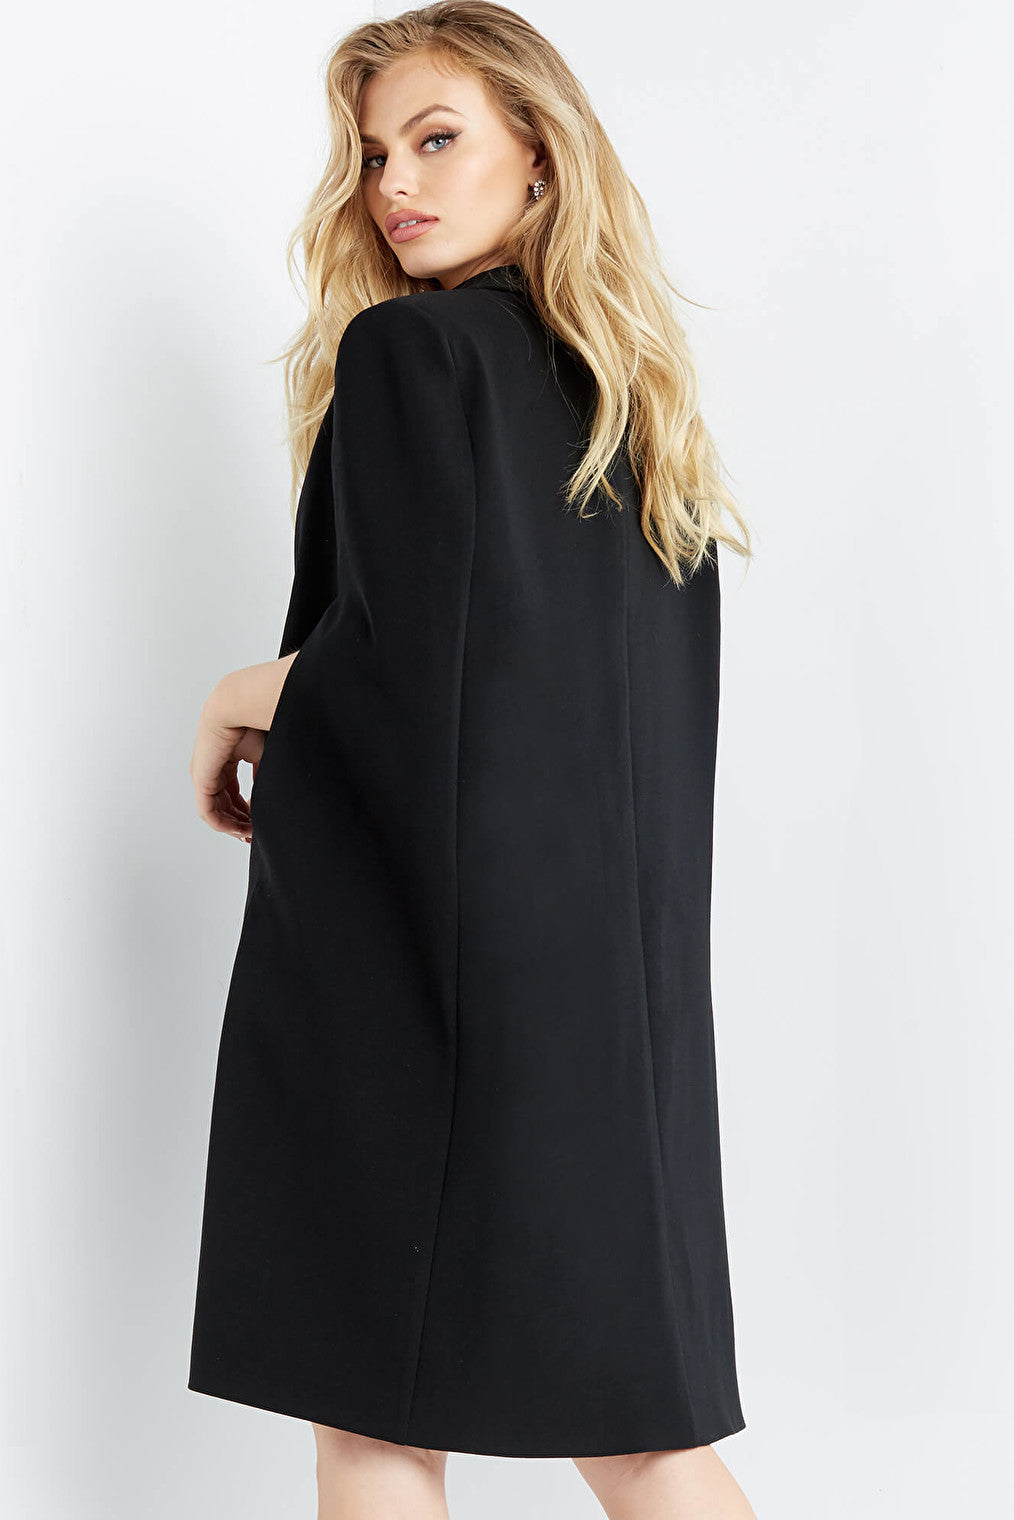 black short dress  3551